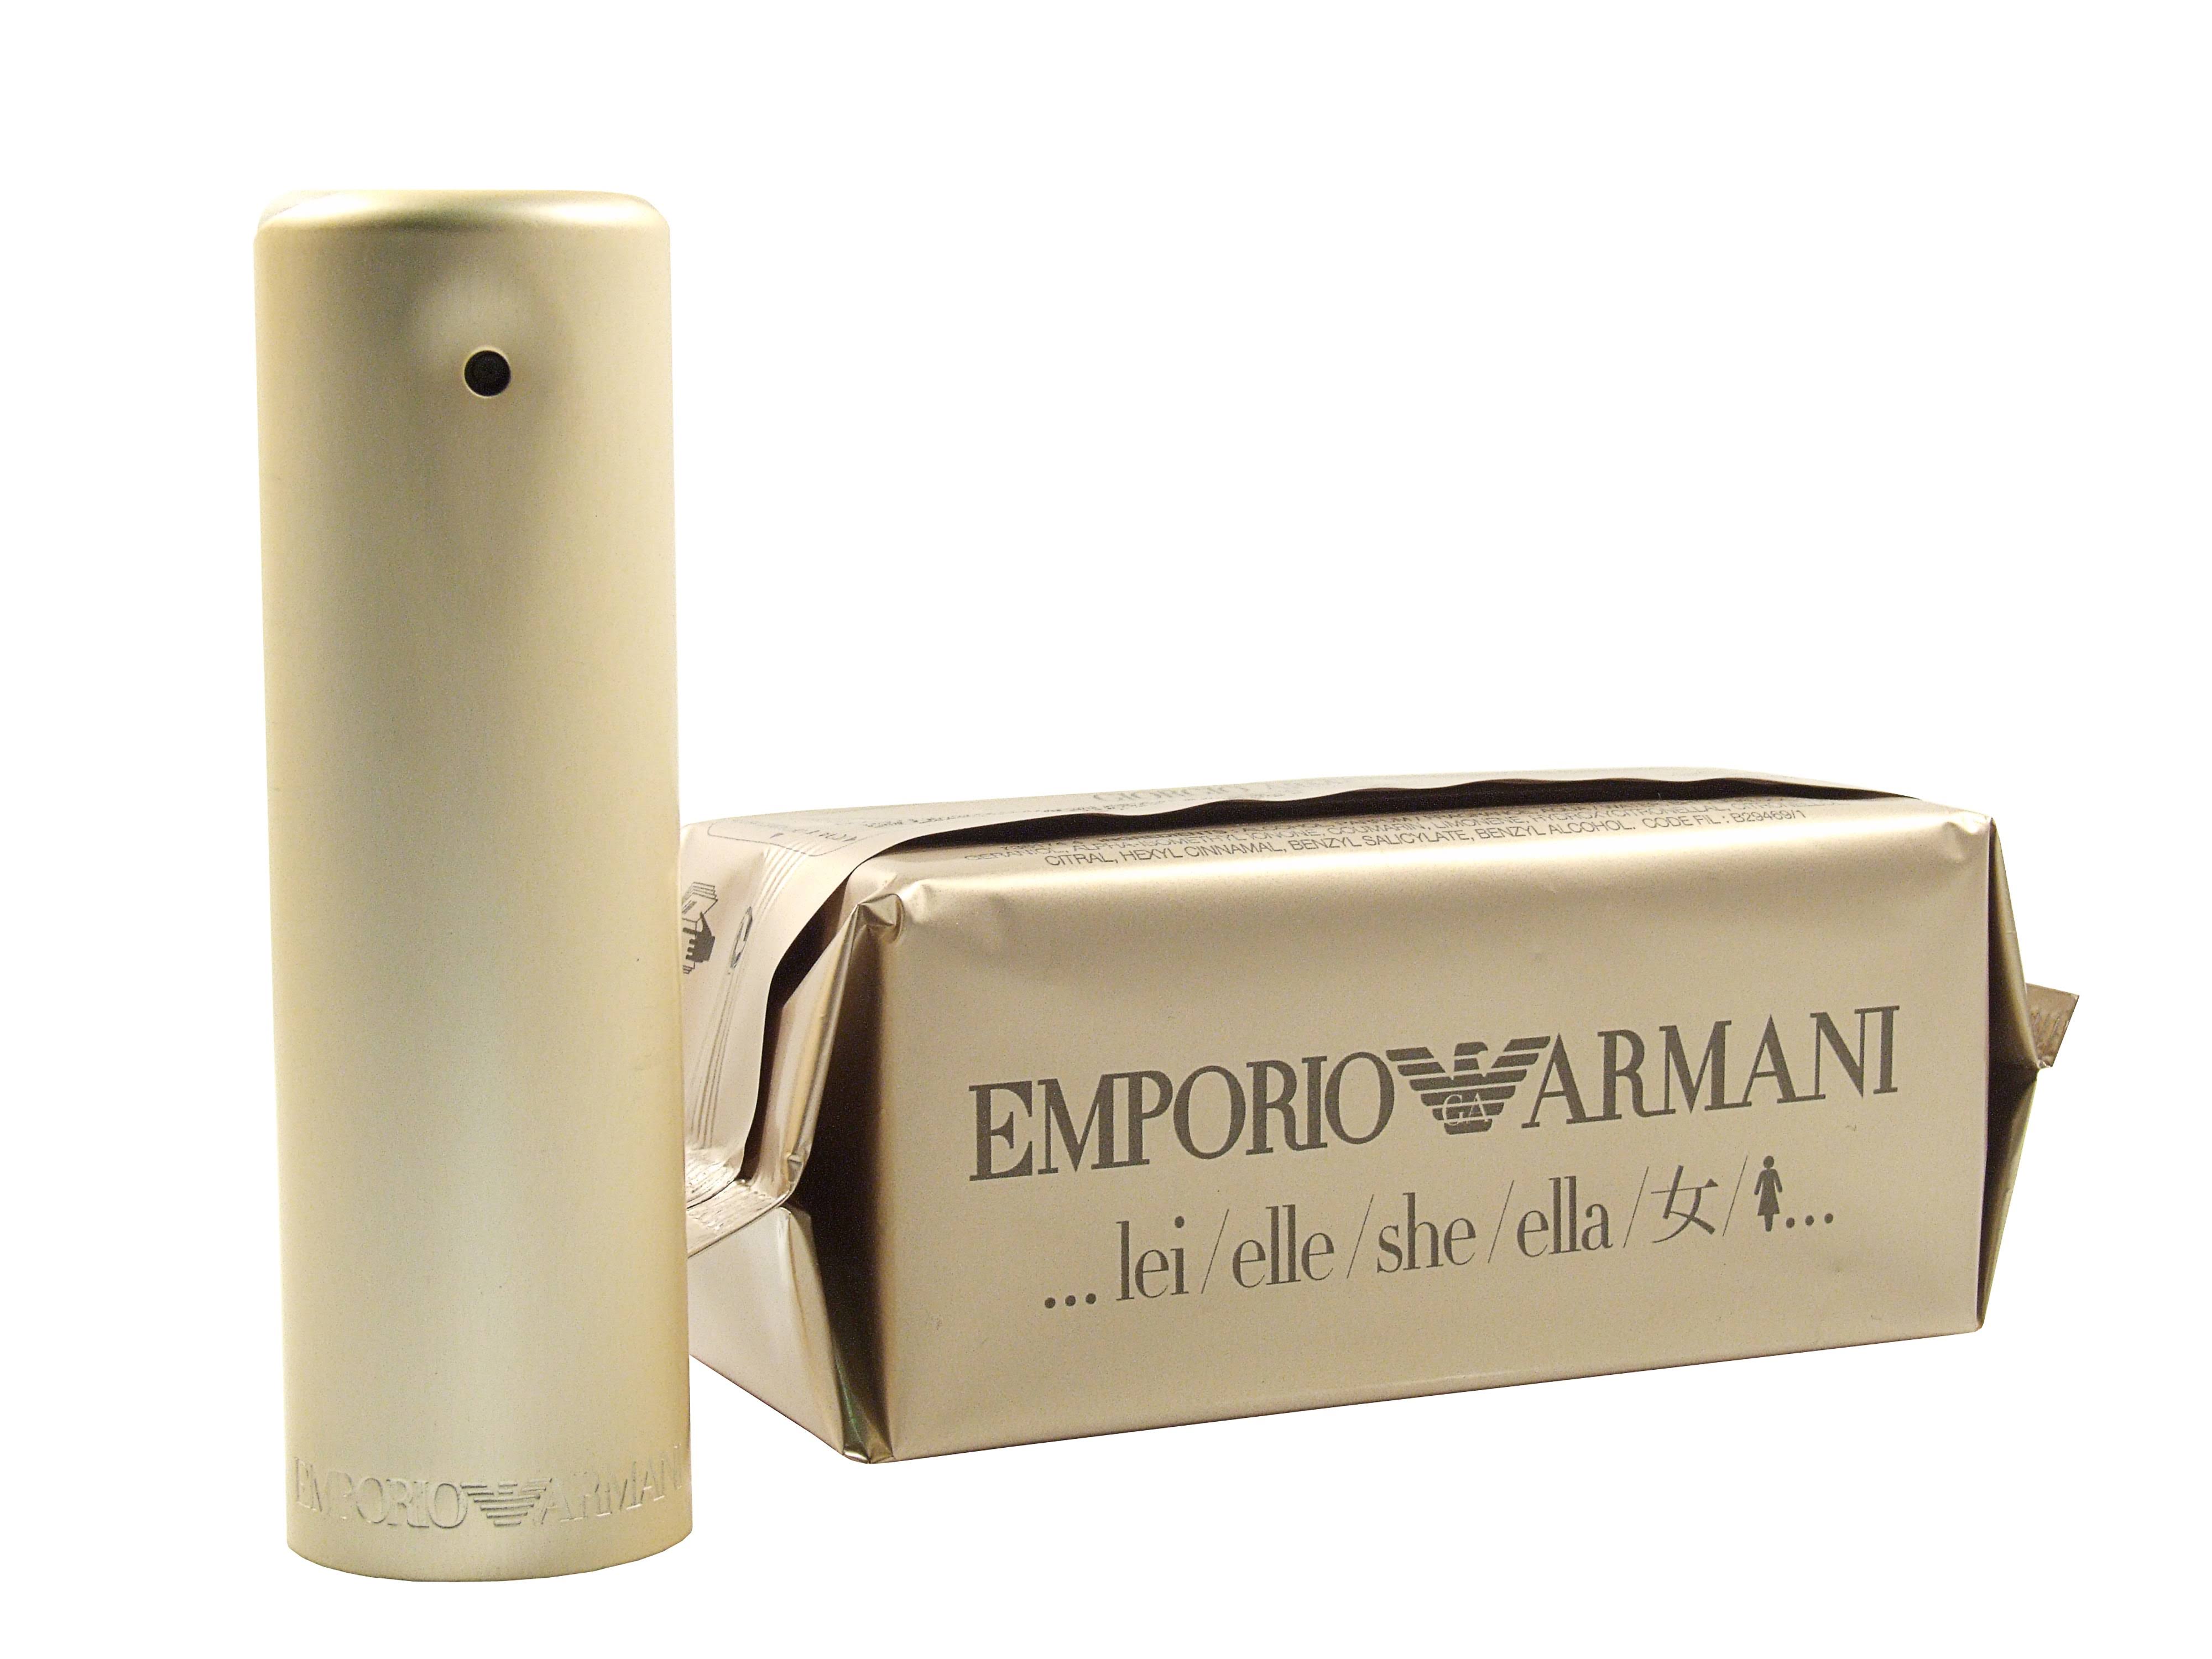 Emporio Armani for Women Eau de Parfum Spray - 50ml